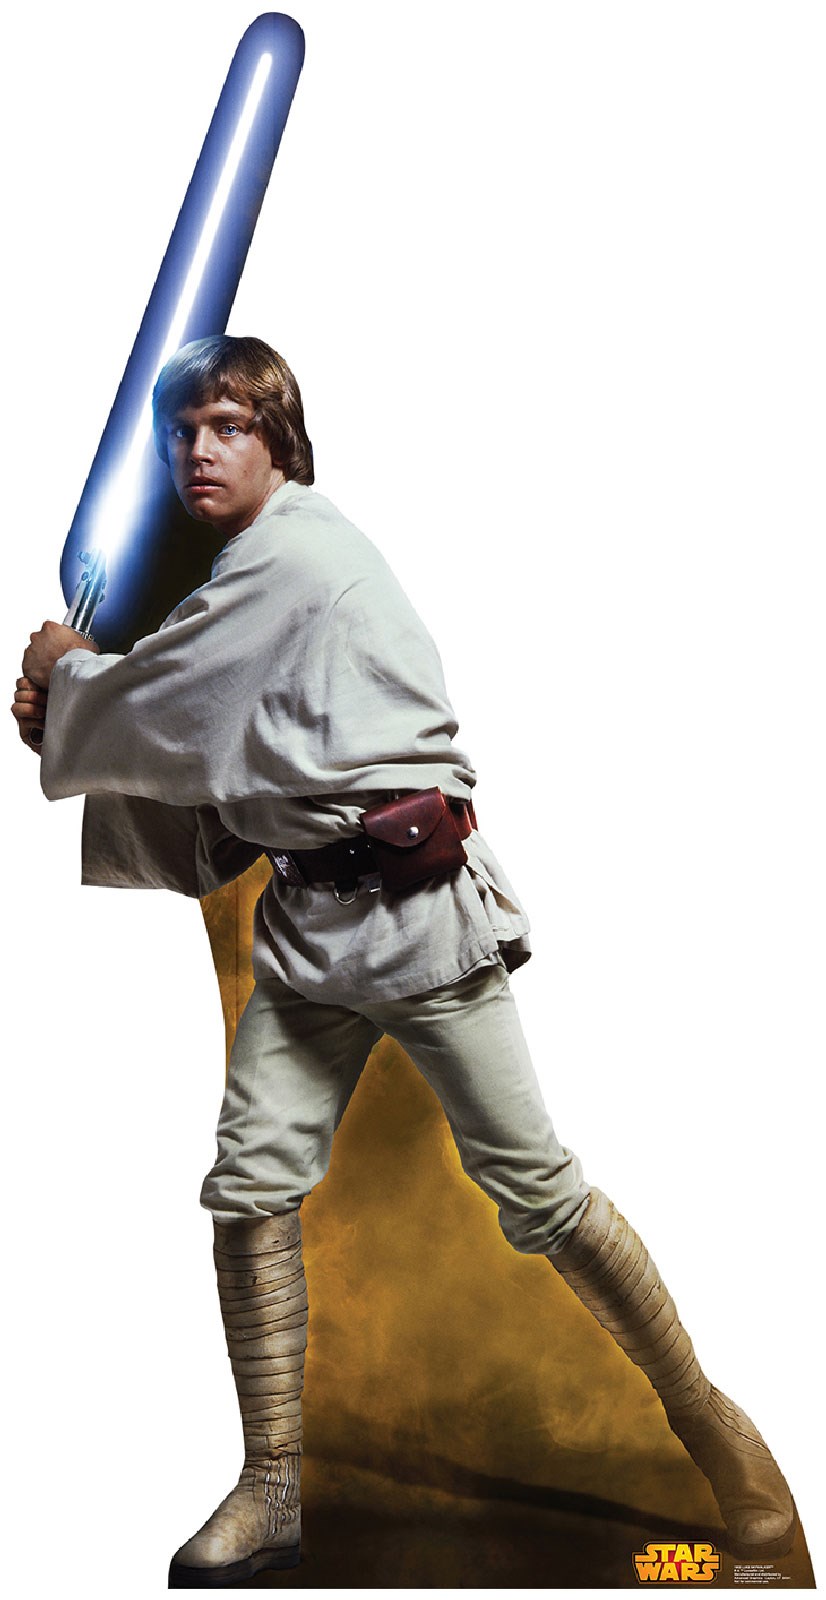 Star Wars Luke Skywalker Cardboard Stand Up 7.25